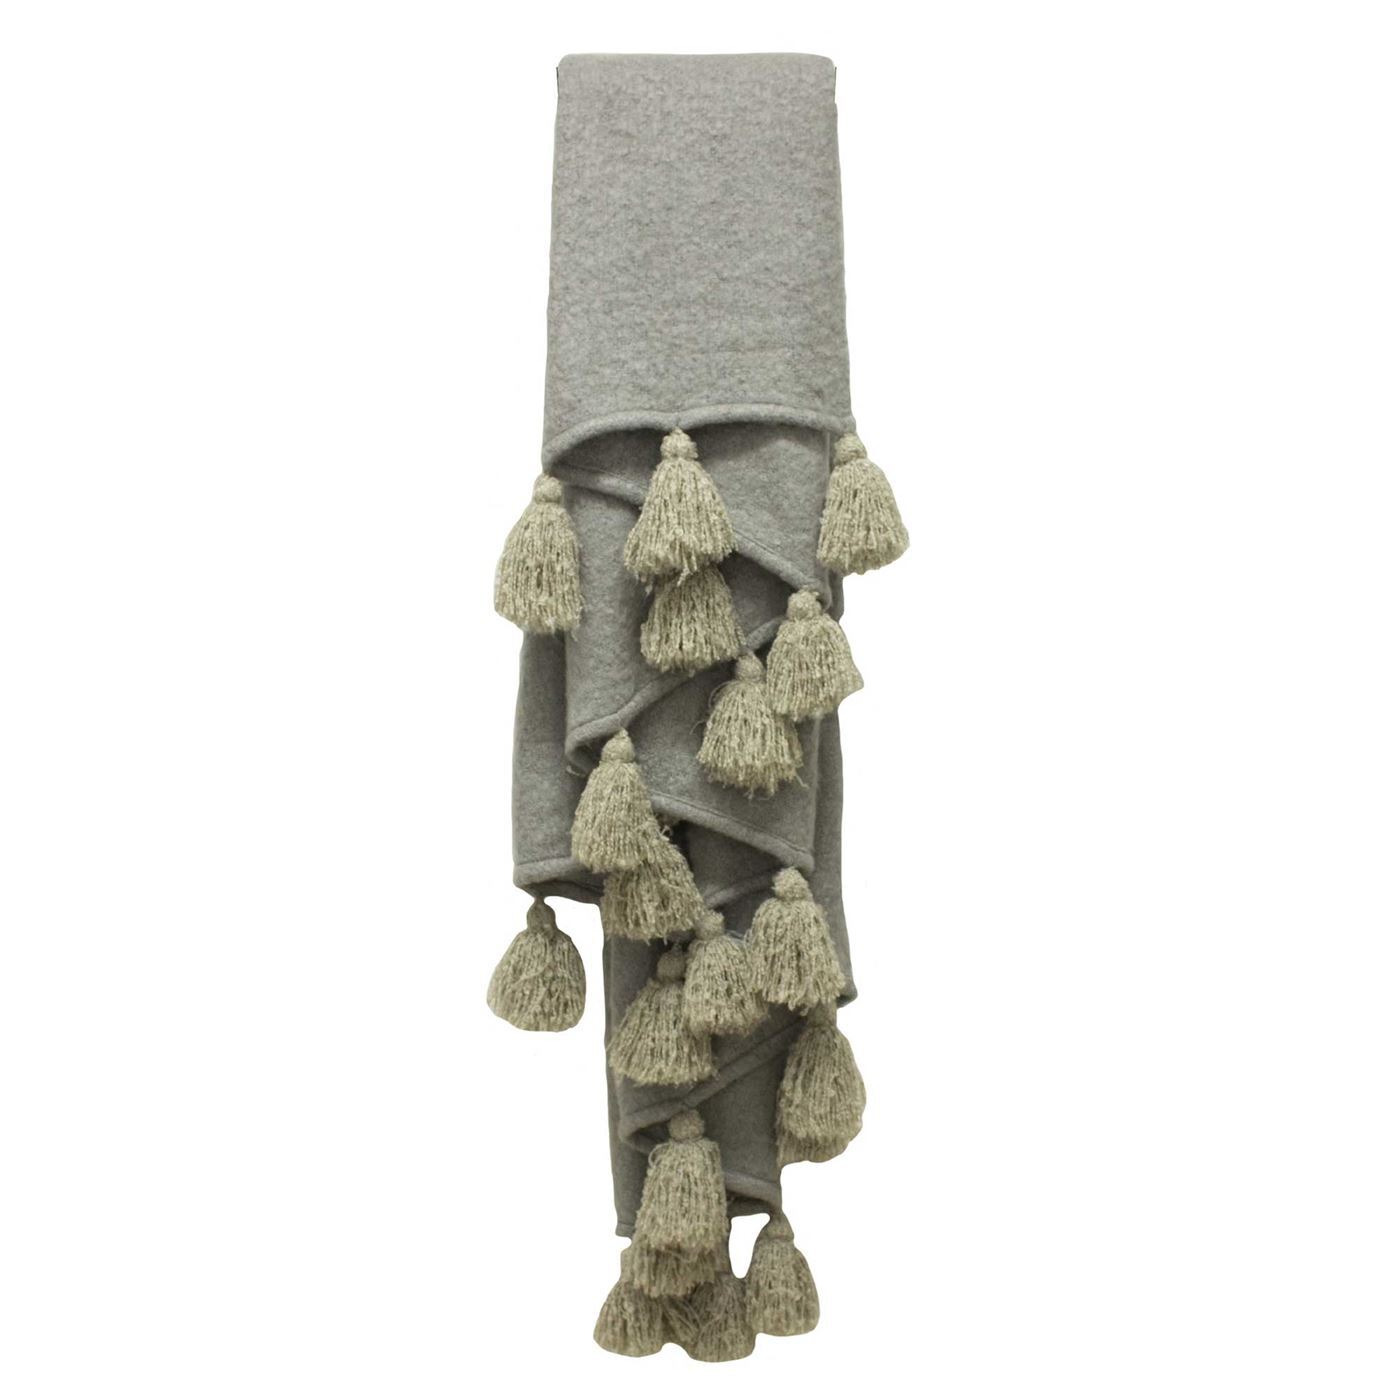 Natural Tassel Throw Blanket, Neutral Fabric - Barker & Stonehouse - image 1